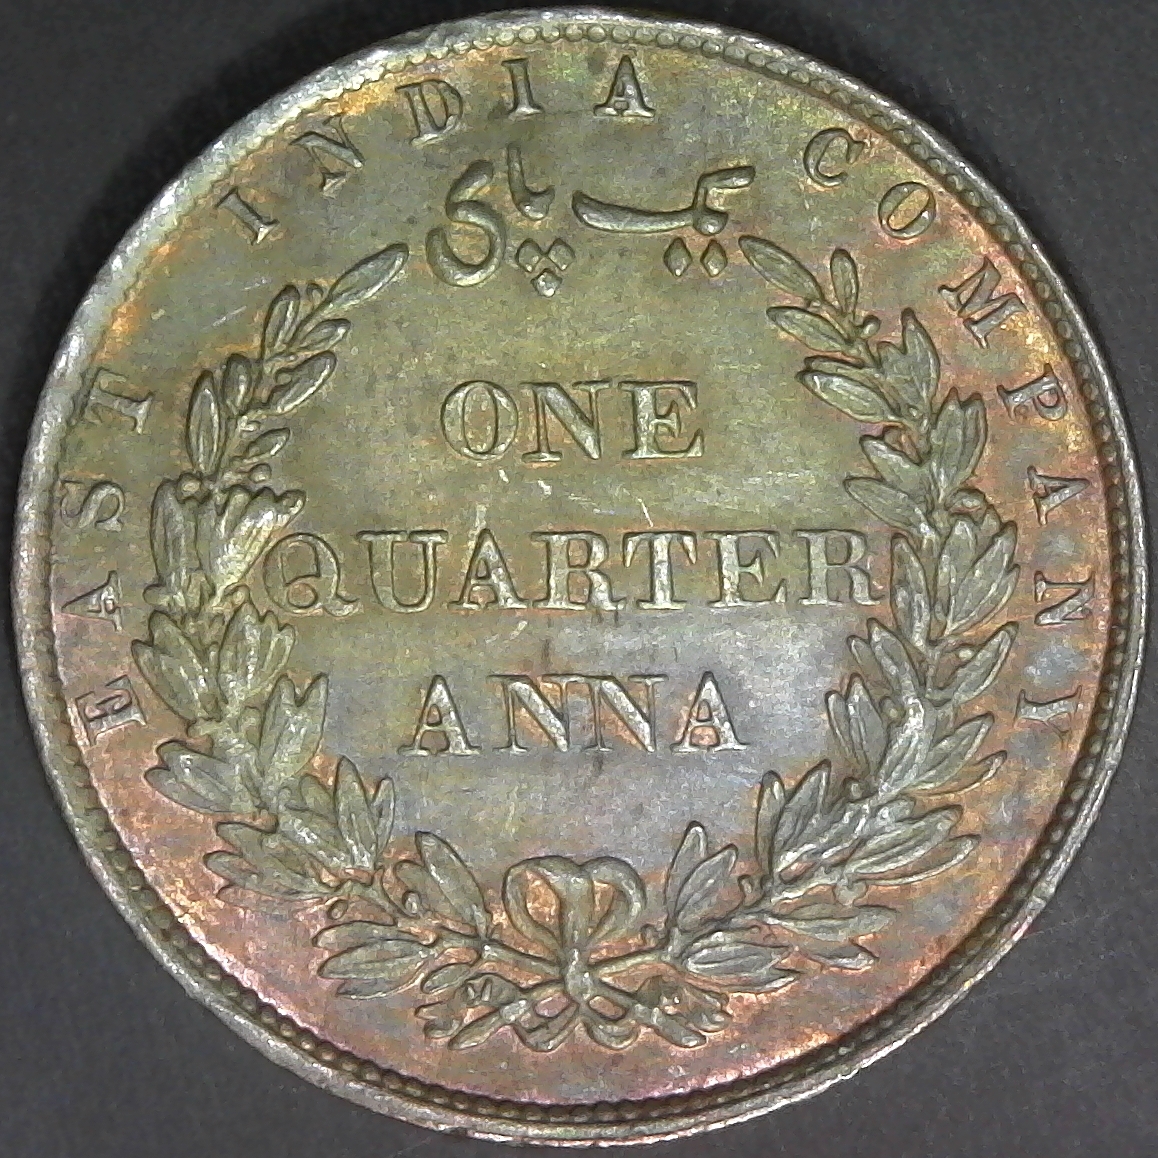 India East India Company One Qtr Anna 1858 rev.jpg